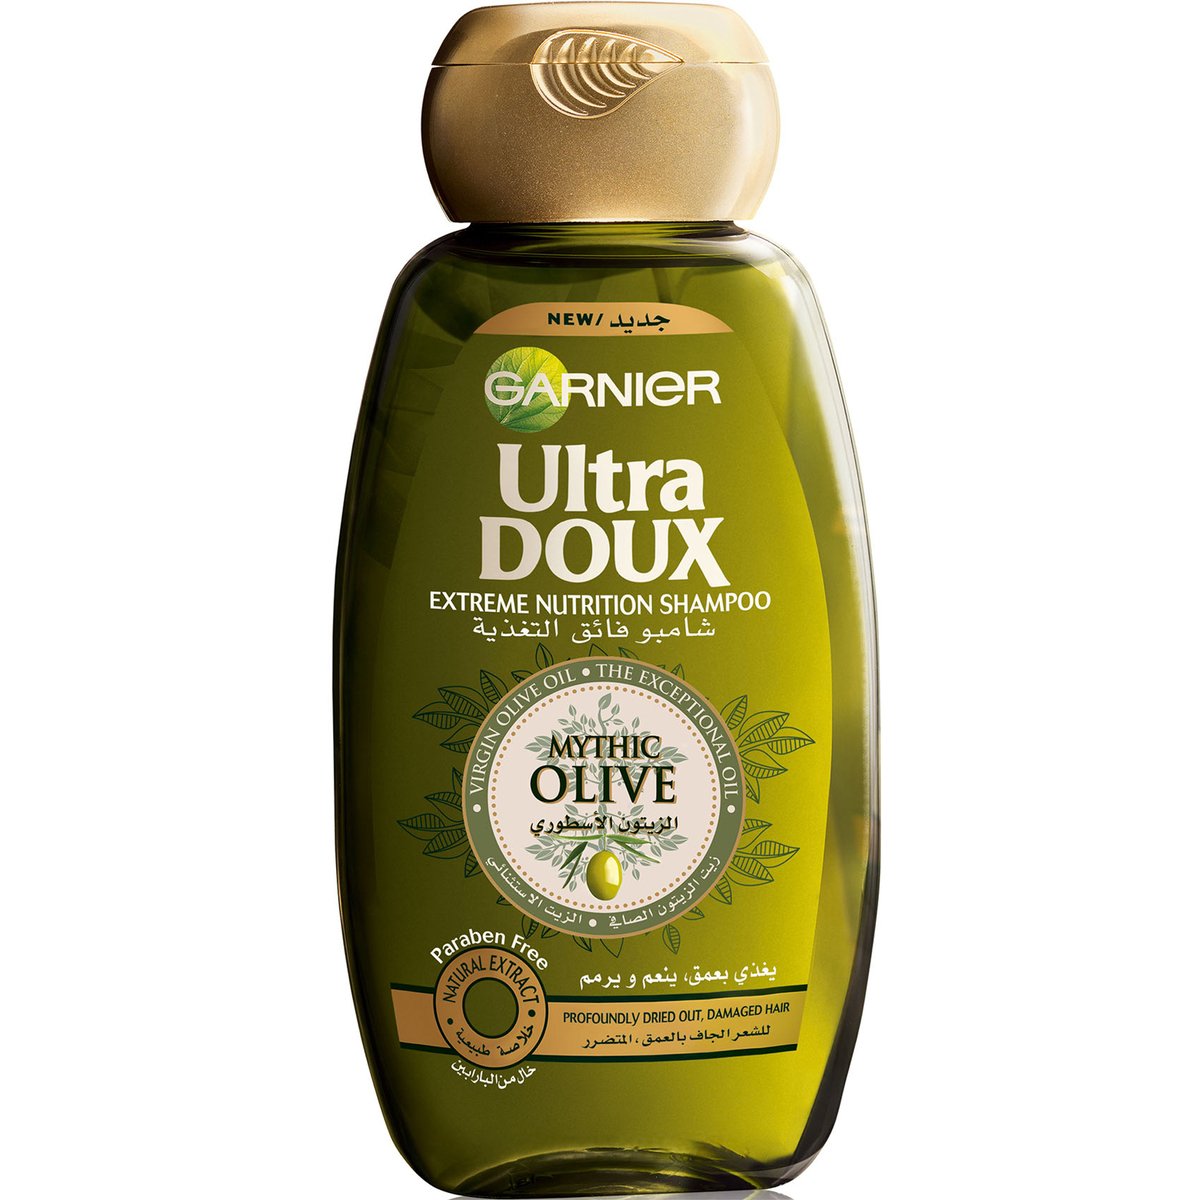 Garnier Ultra Doux Mythic Olive Shampoo, 400 ml